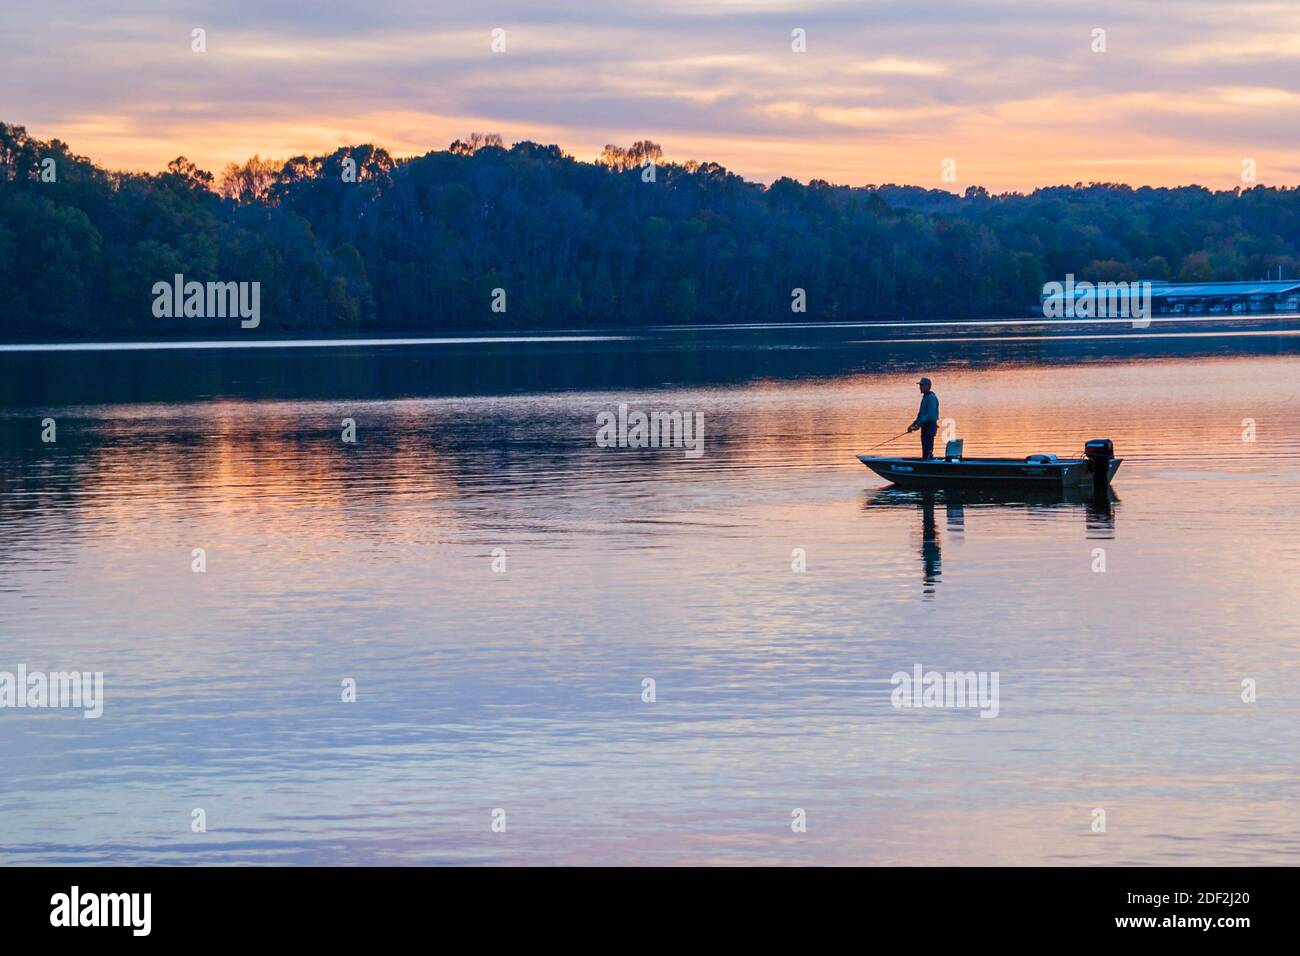 Alabama Rogersville Joe Wheeler State Park,First Creek Tennessee River,evening night twilight fishing boat man fisherman silhouette Stock Photo